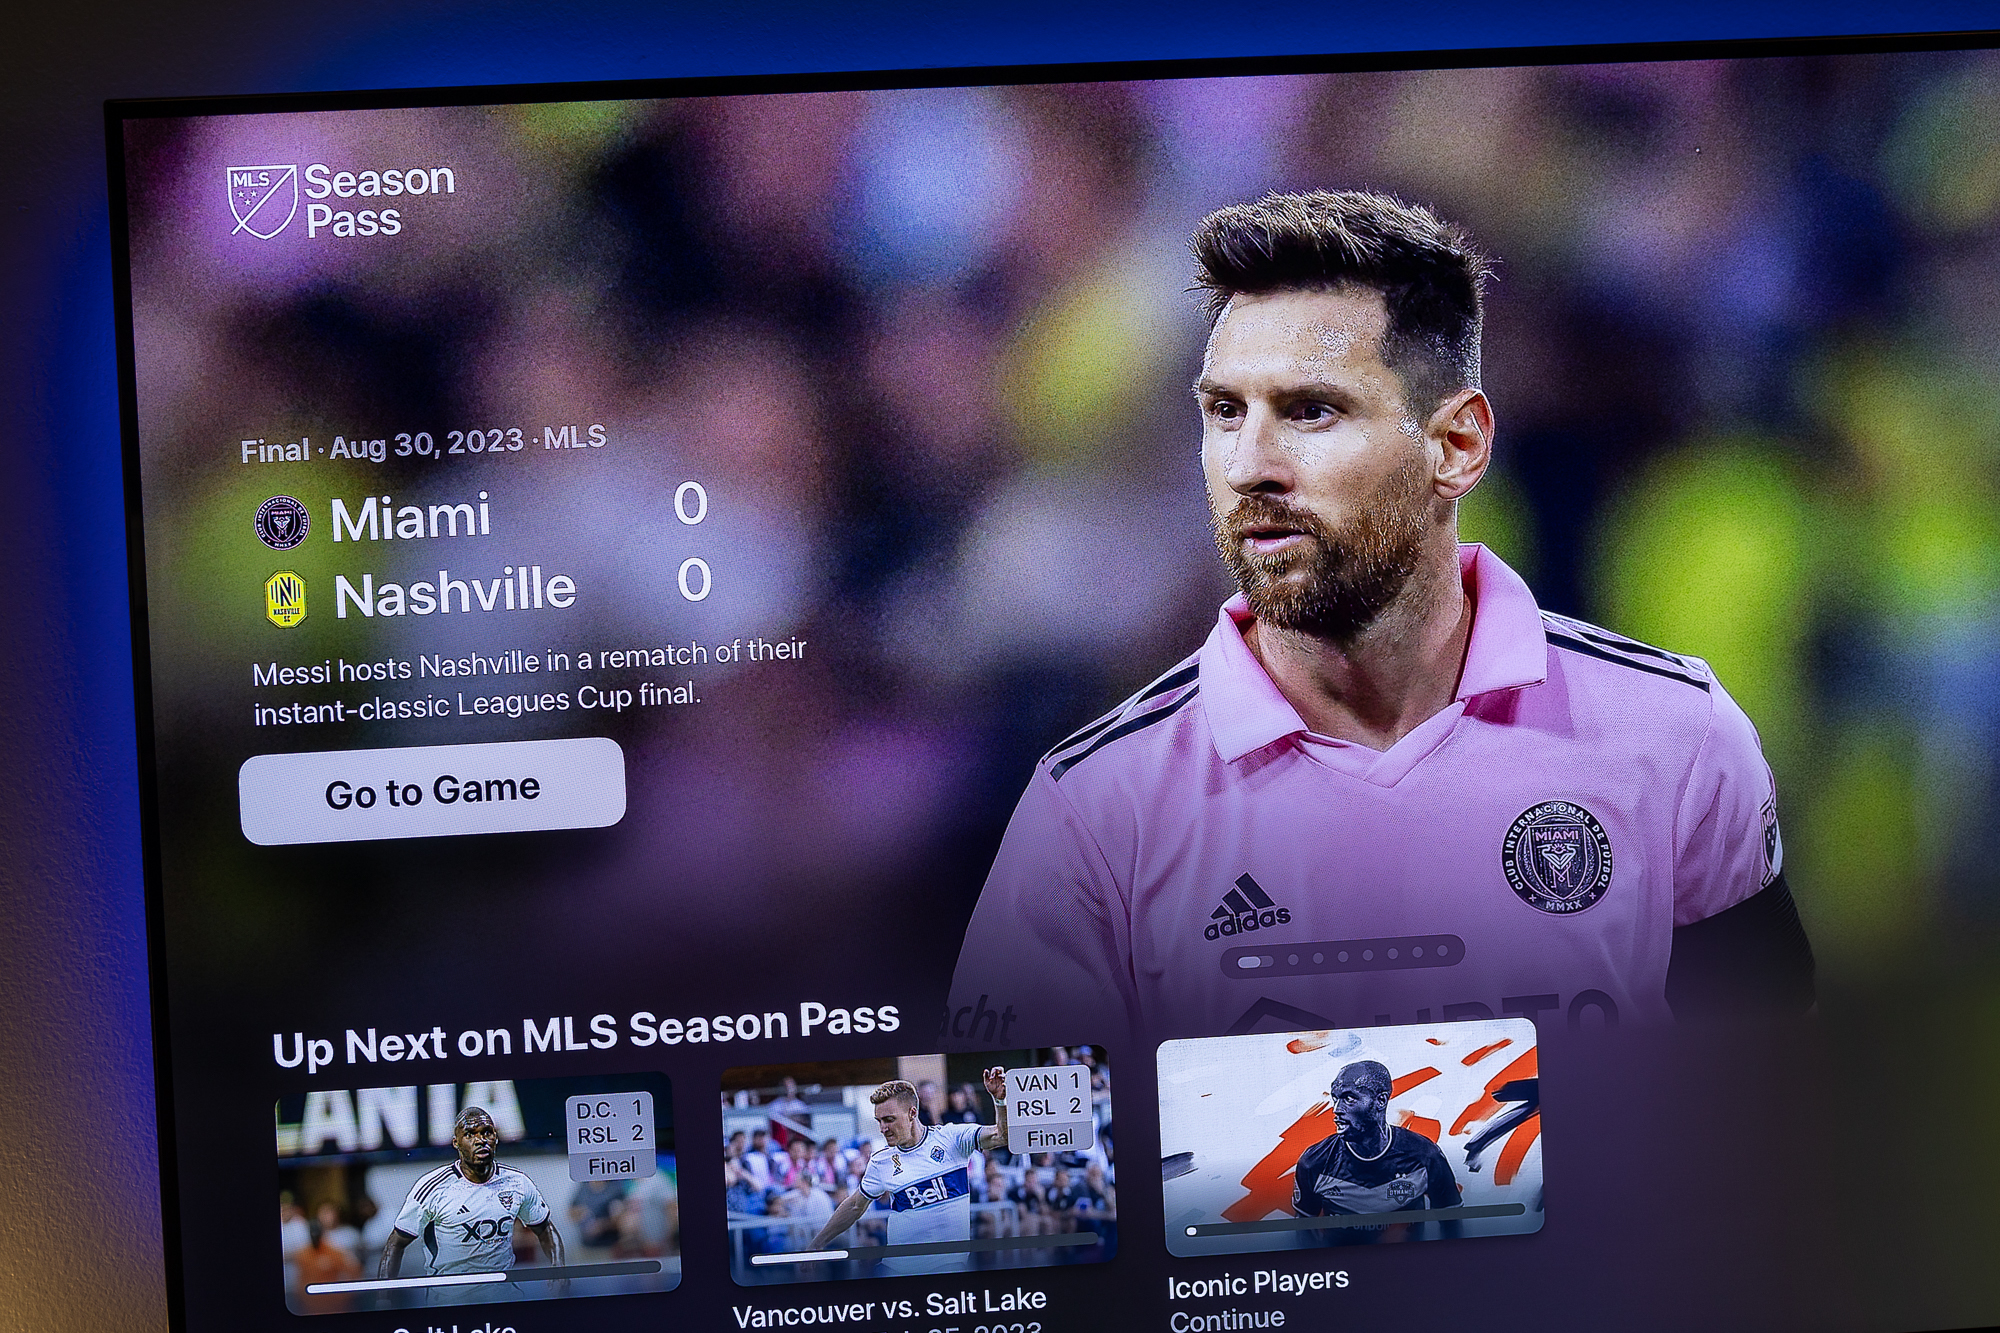 Bienvenido Messi: How to watch, stream Primetime event on MLS Season Pass